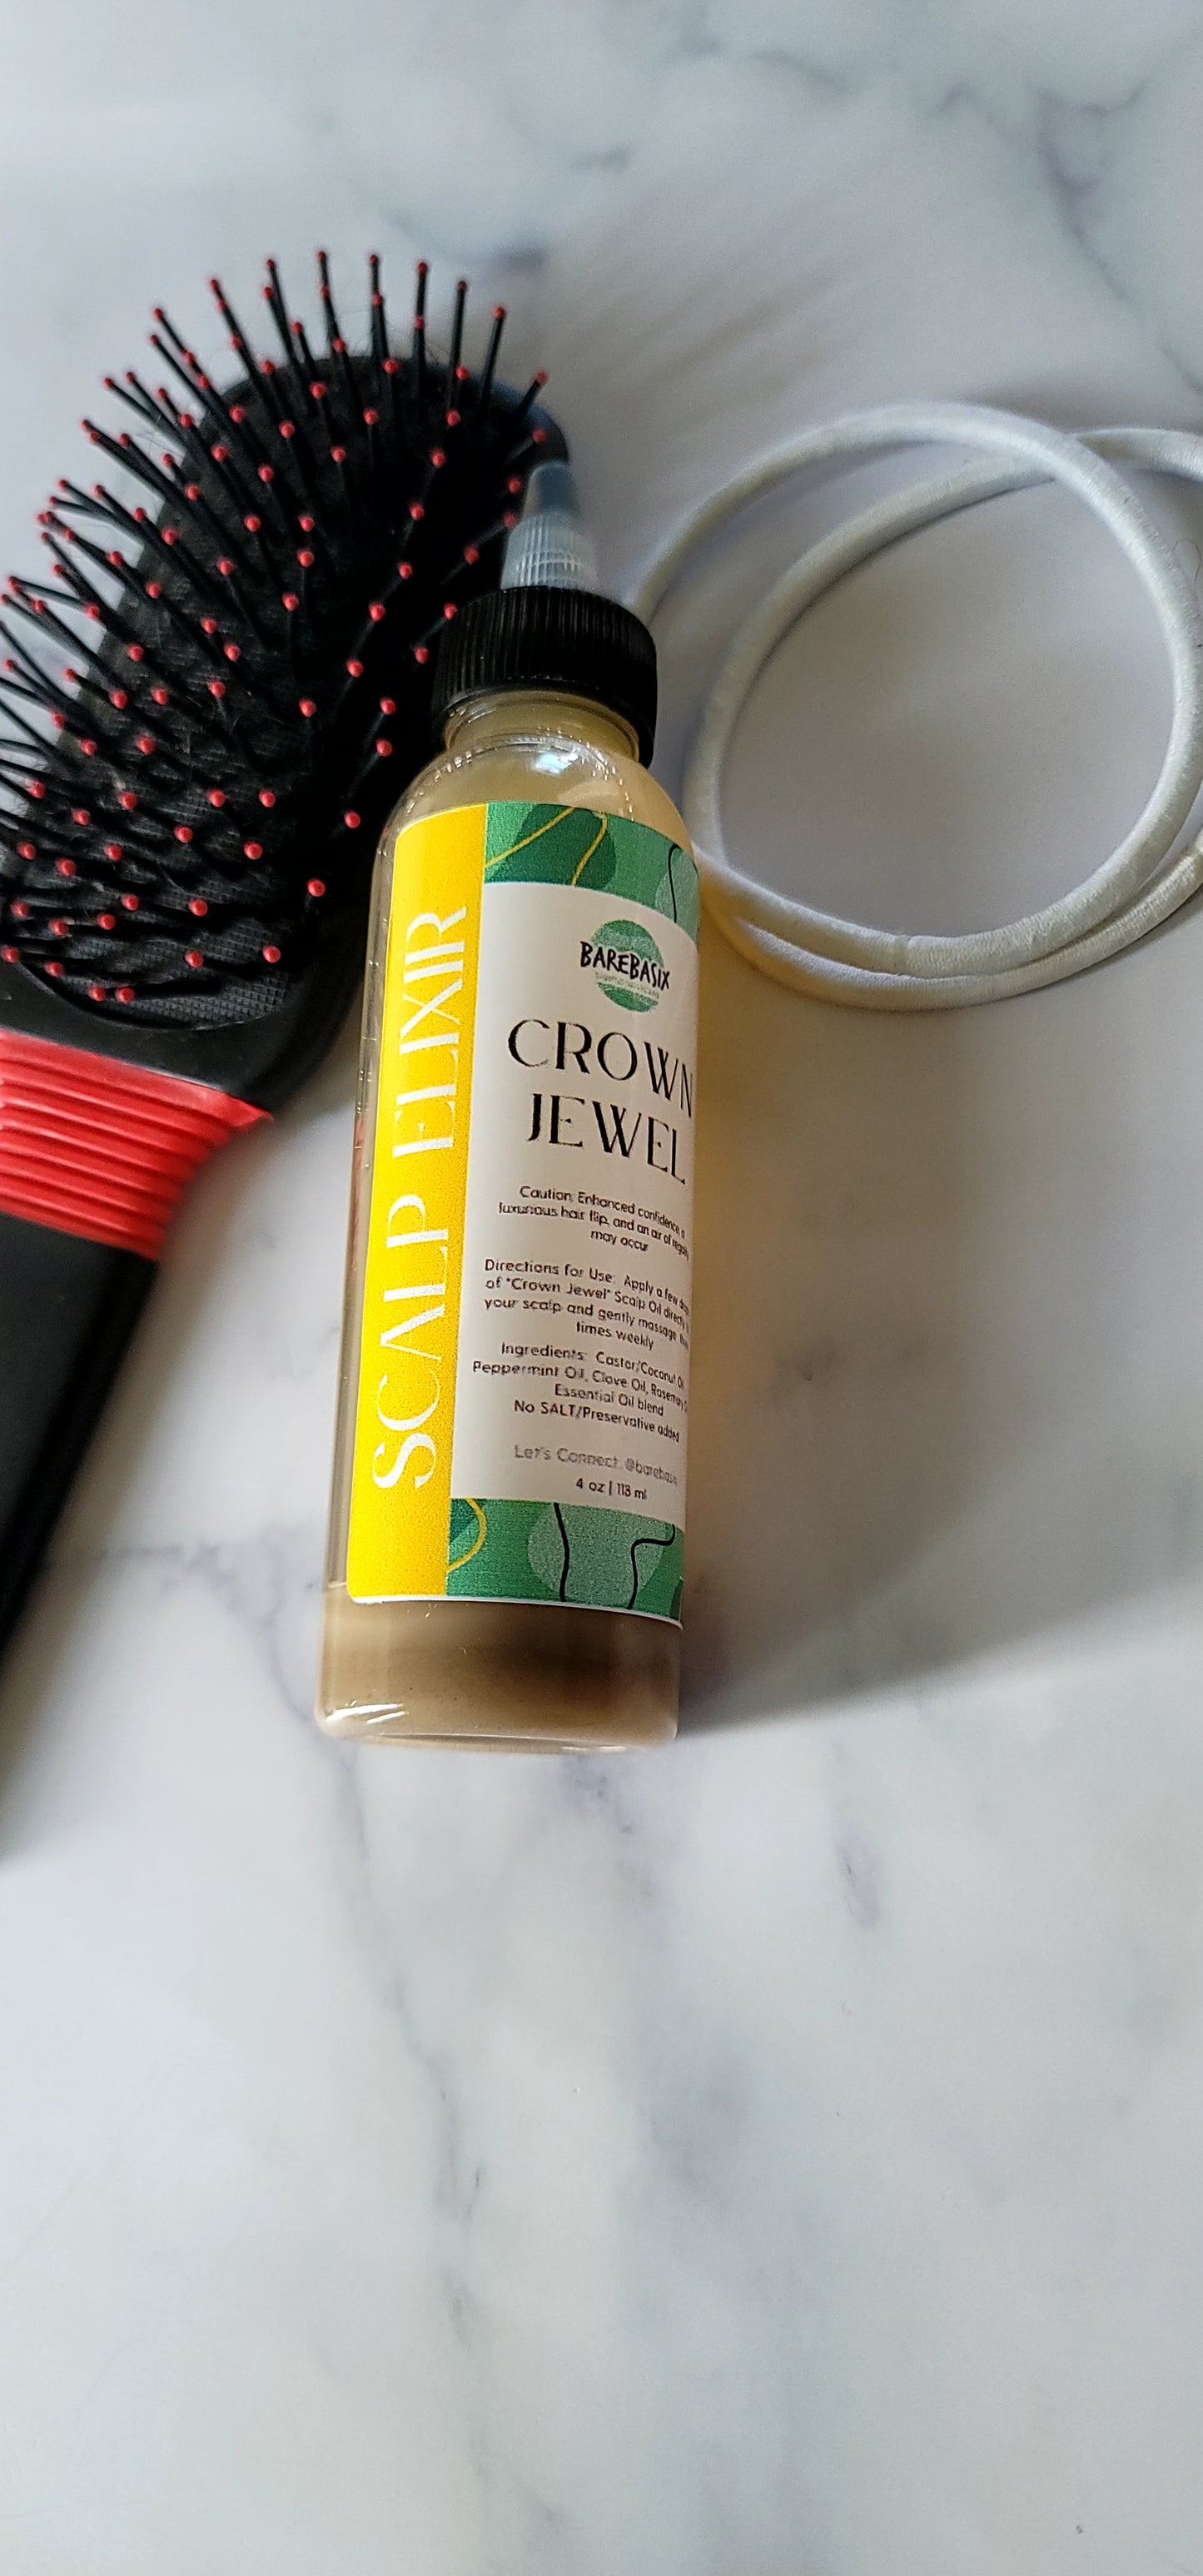 Crown Jewel- Rosemary & Peppermint Hair Oil